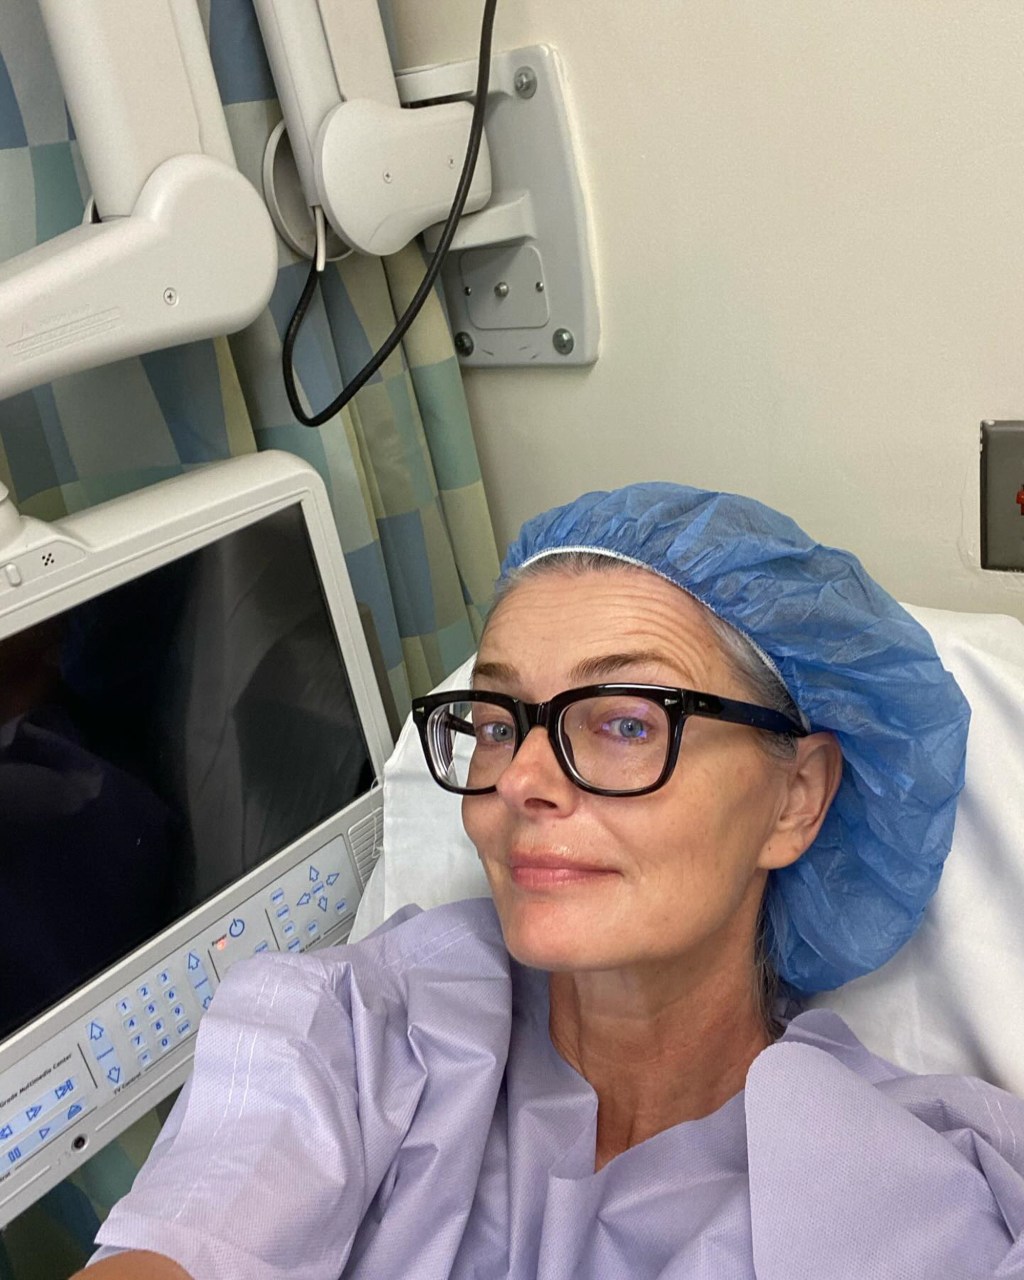 Paulina Porizkova in hospital bed.